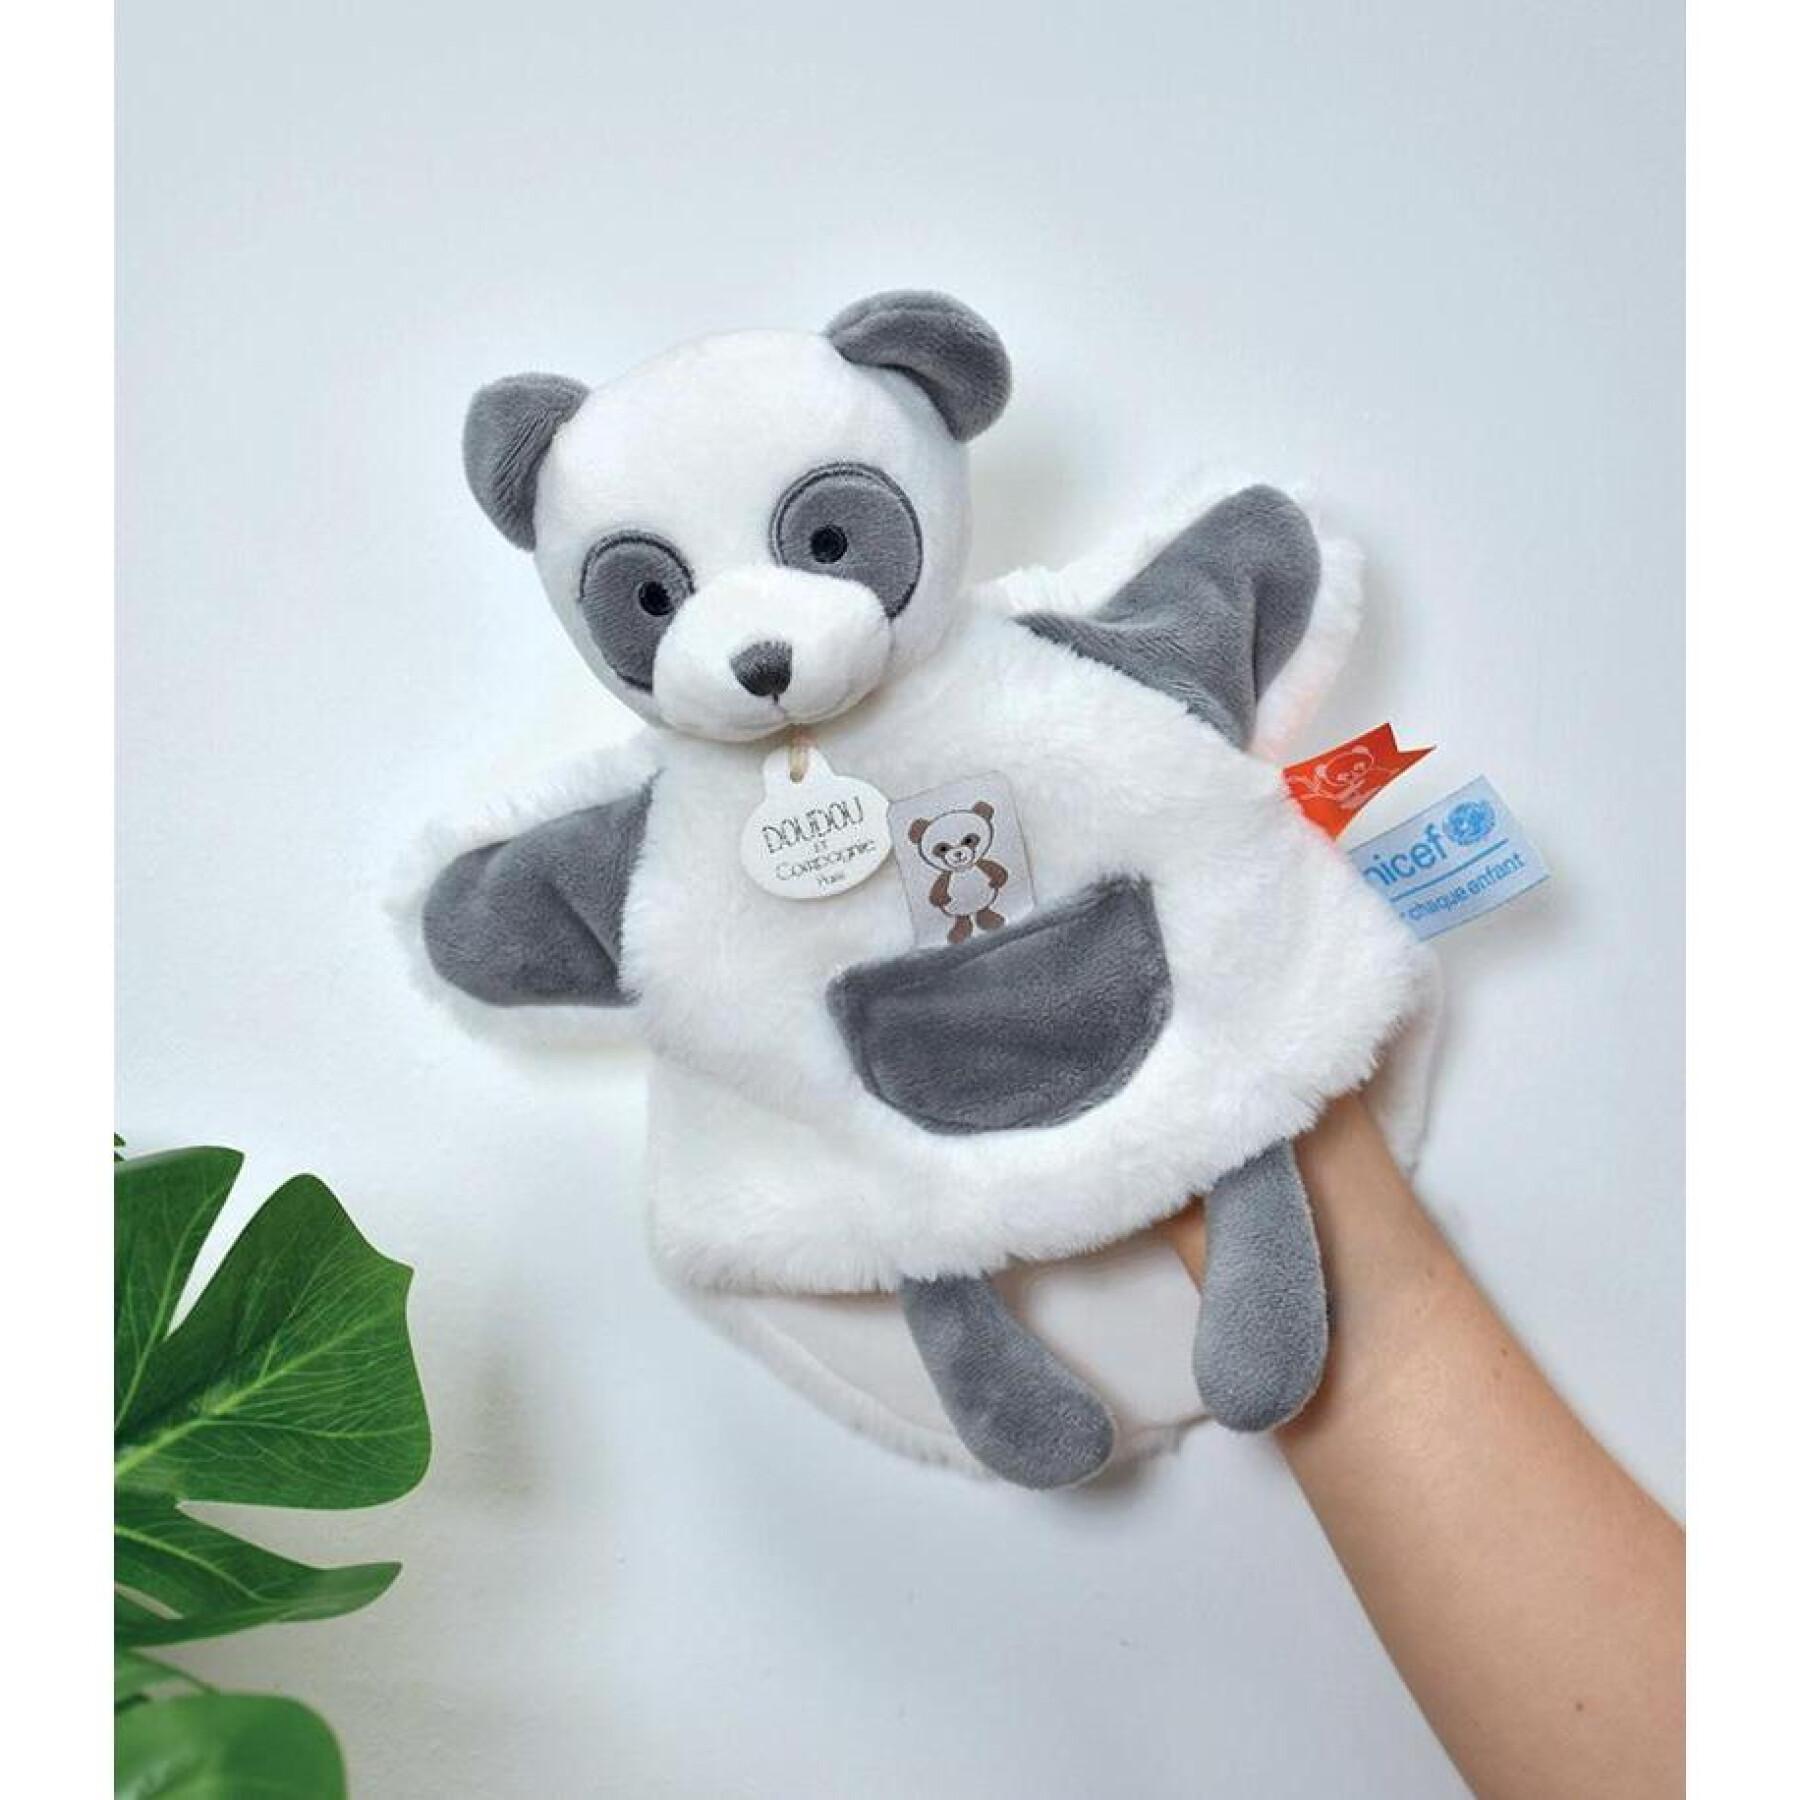 Marioneta Doudou & compagnie Unicef - Panda